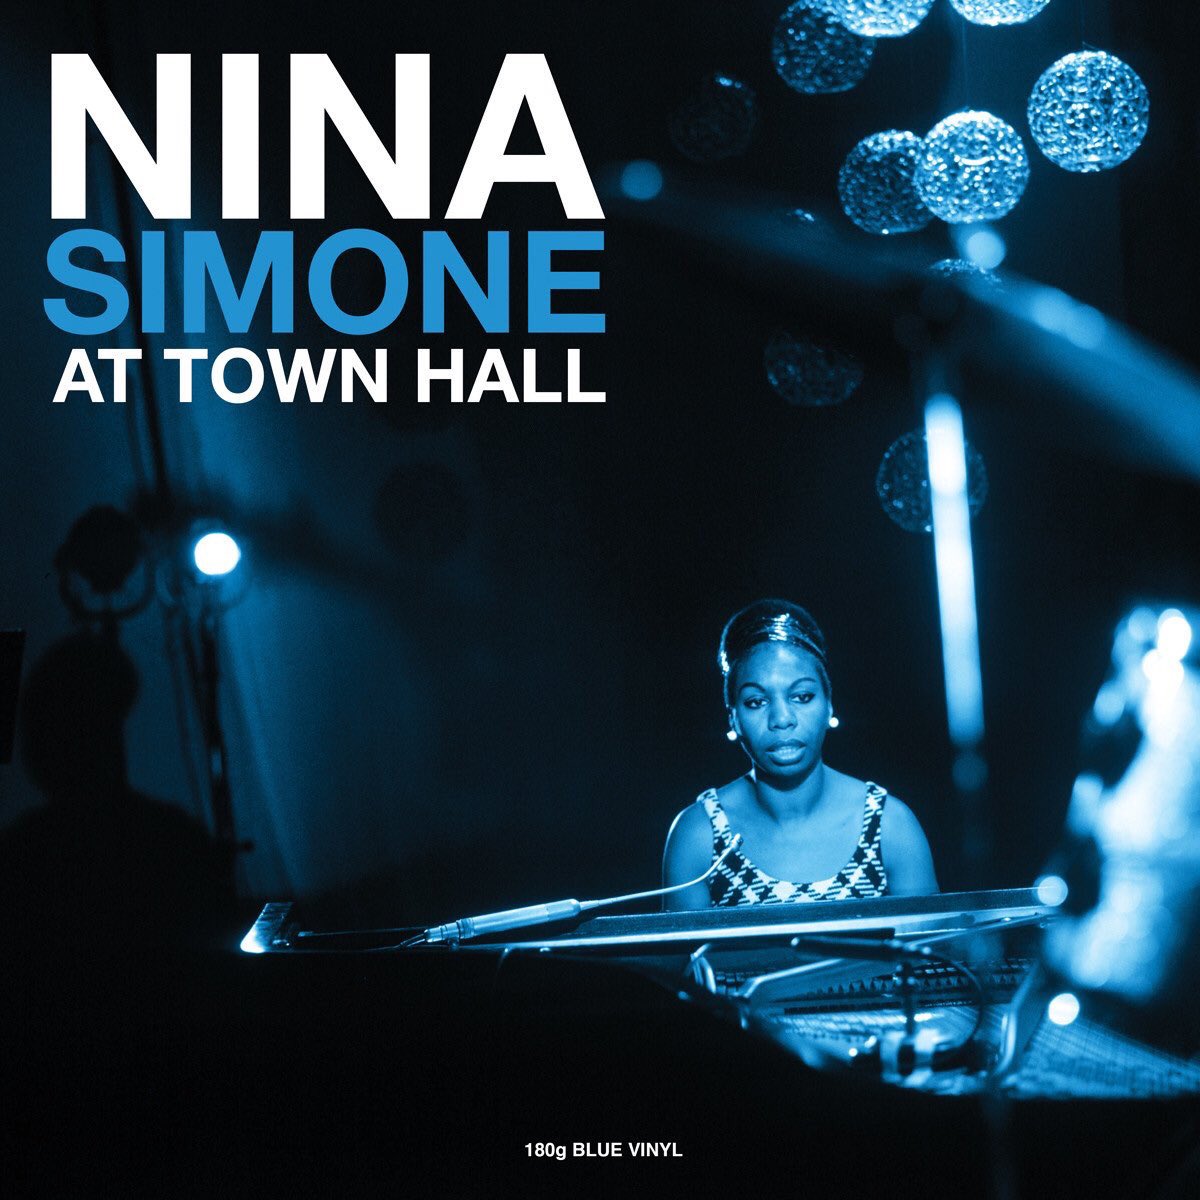 Nina Simone 'Don't Let Me Be Misunderstood' Jazz Classic! youtu.be/NurNZJIODyM #Jazz #Music #Musica #Musique #NinaSimone #JazzMusic #Peace